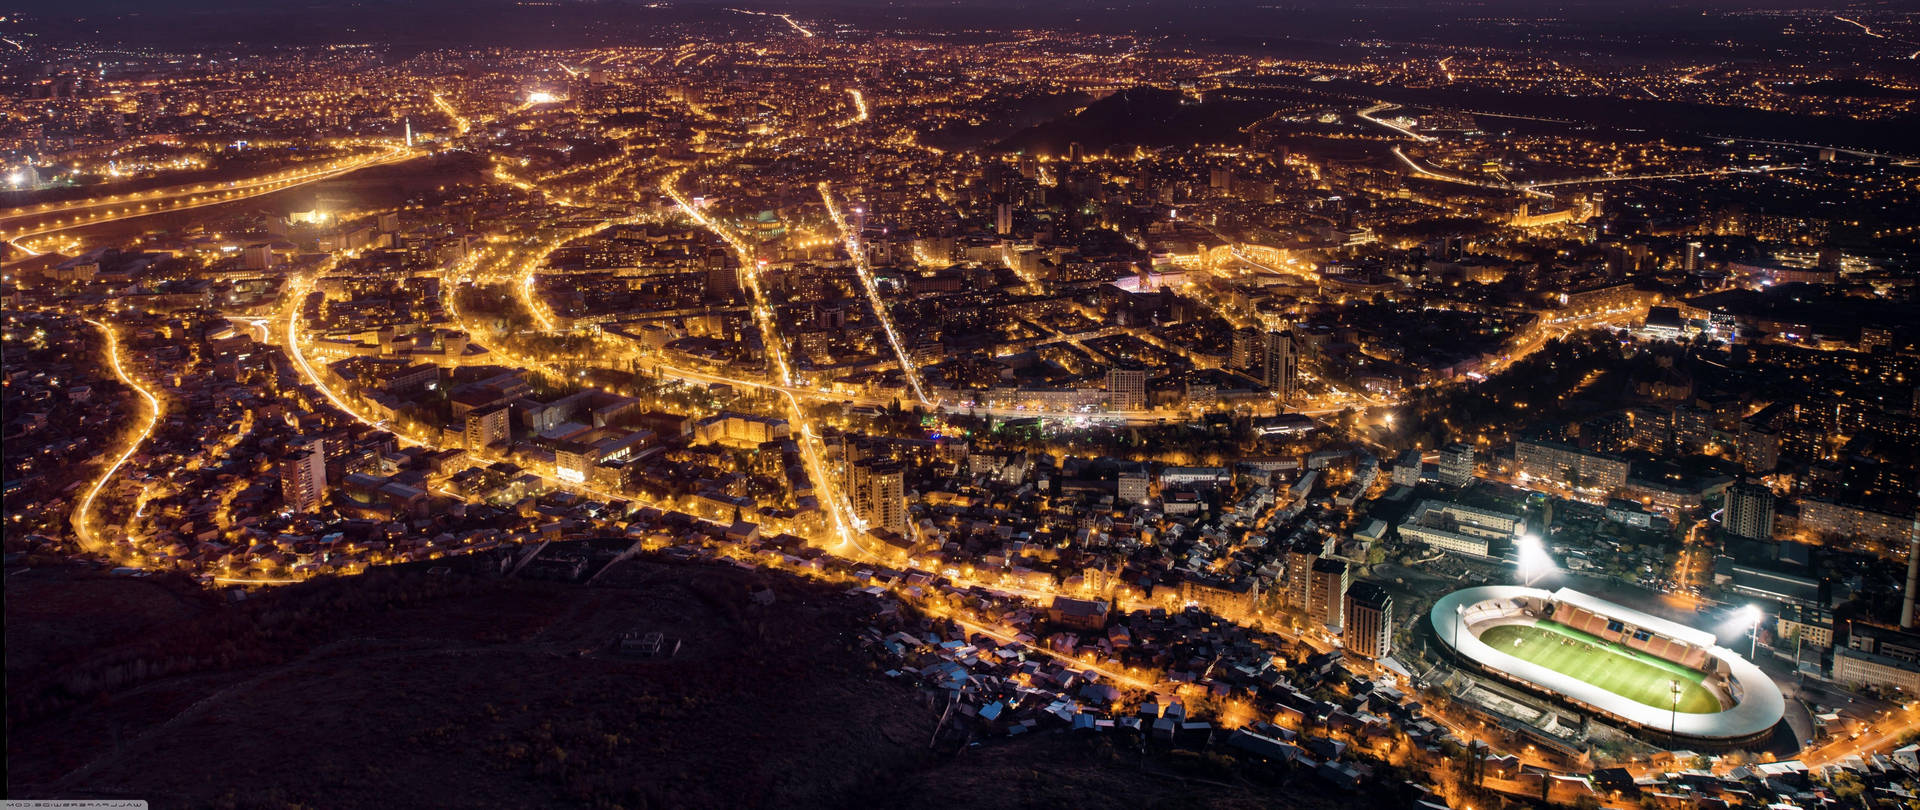 Armenia City At Night